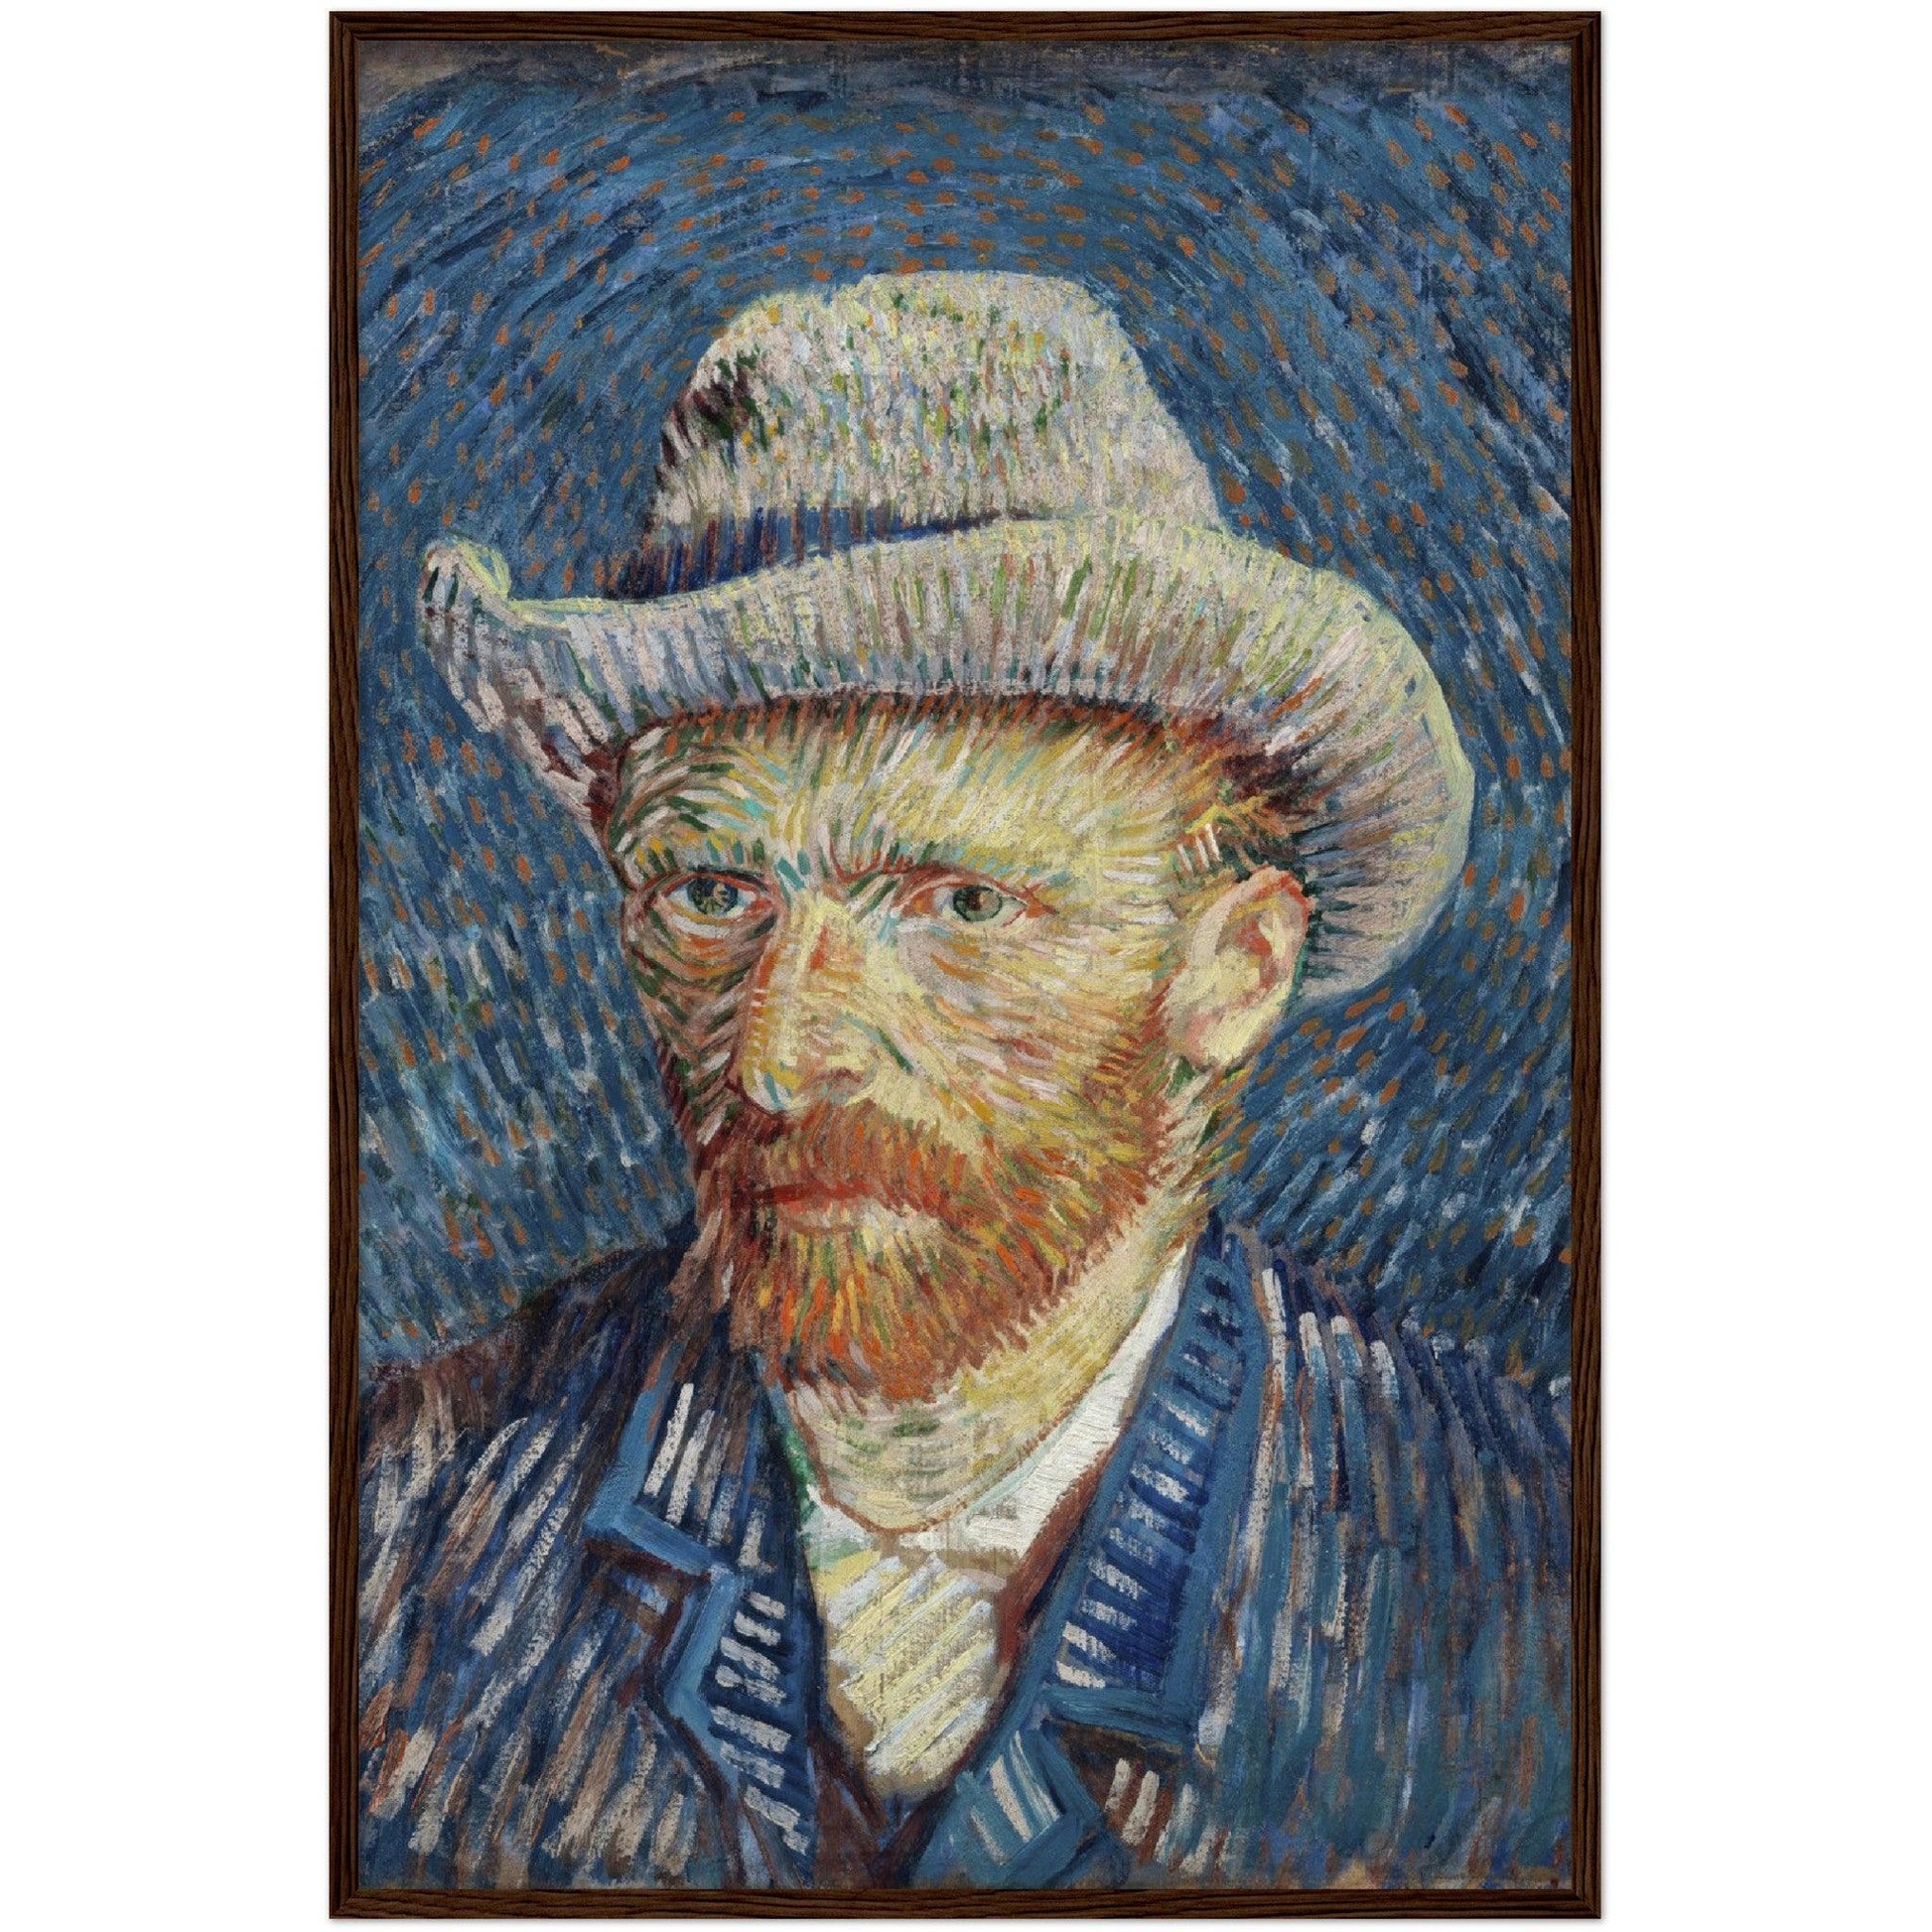 Self-portrait - By Vincent van Gogh - Masters in Art